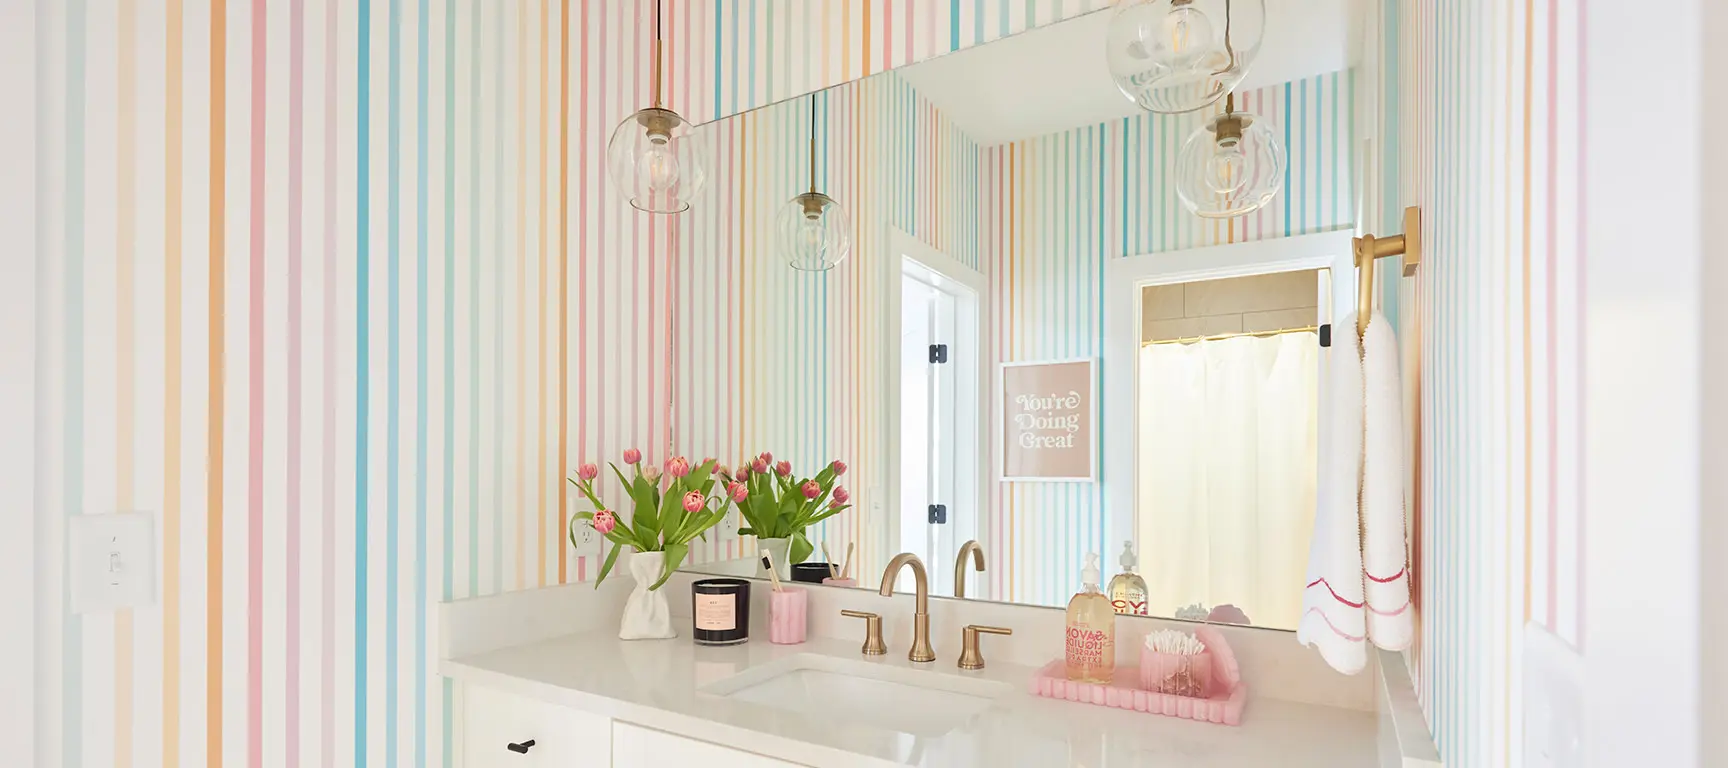 Rainbow striped wallpaper in a bathroom.